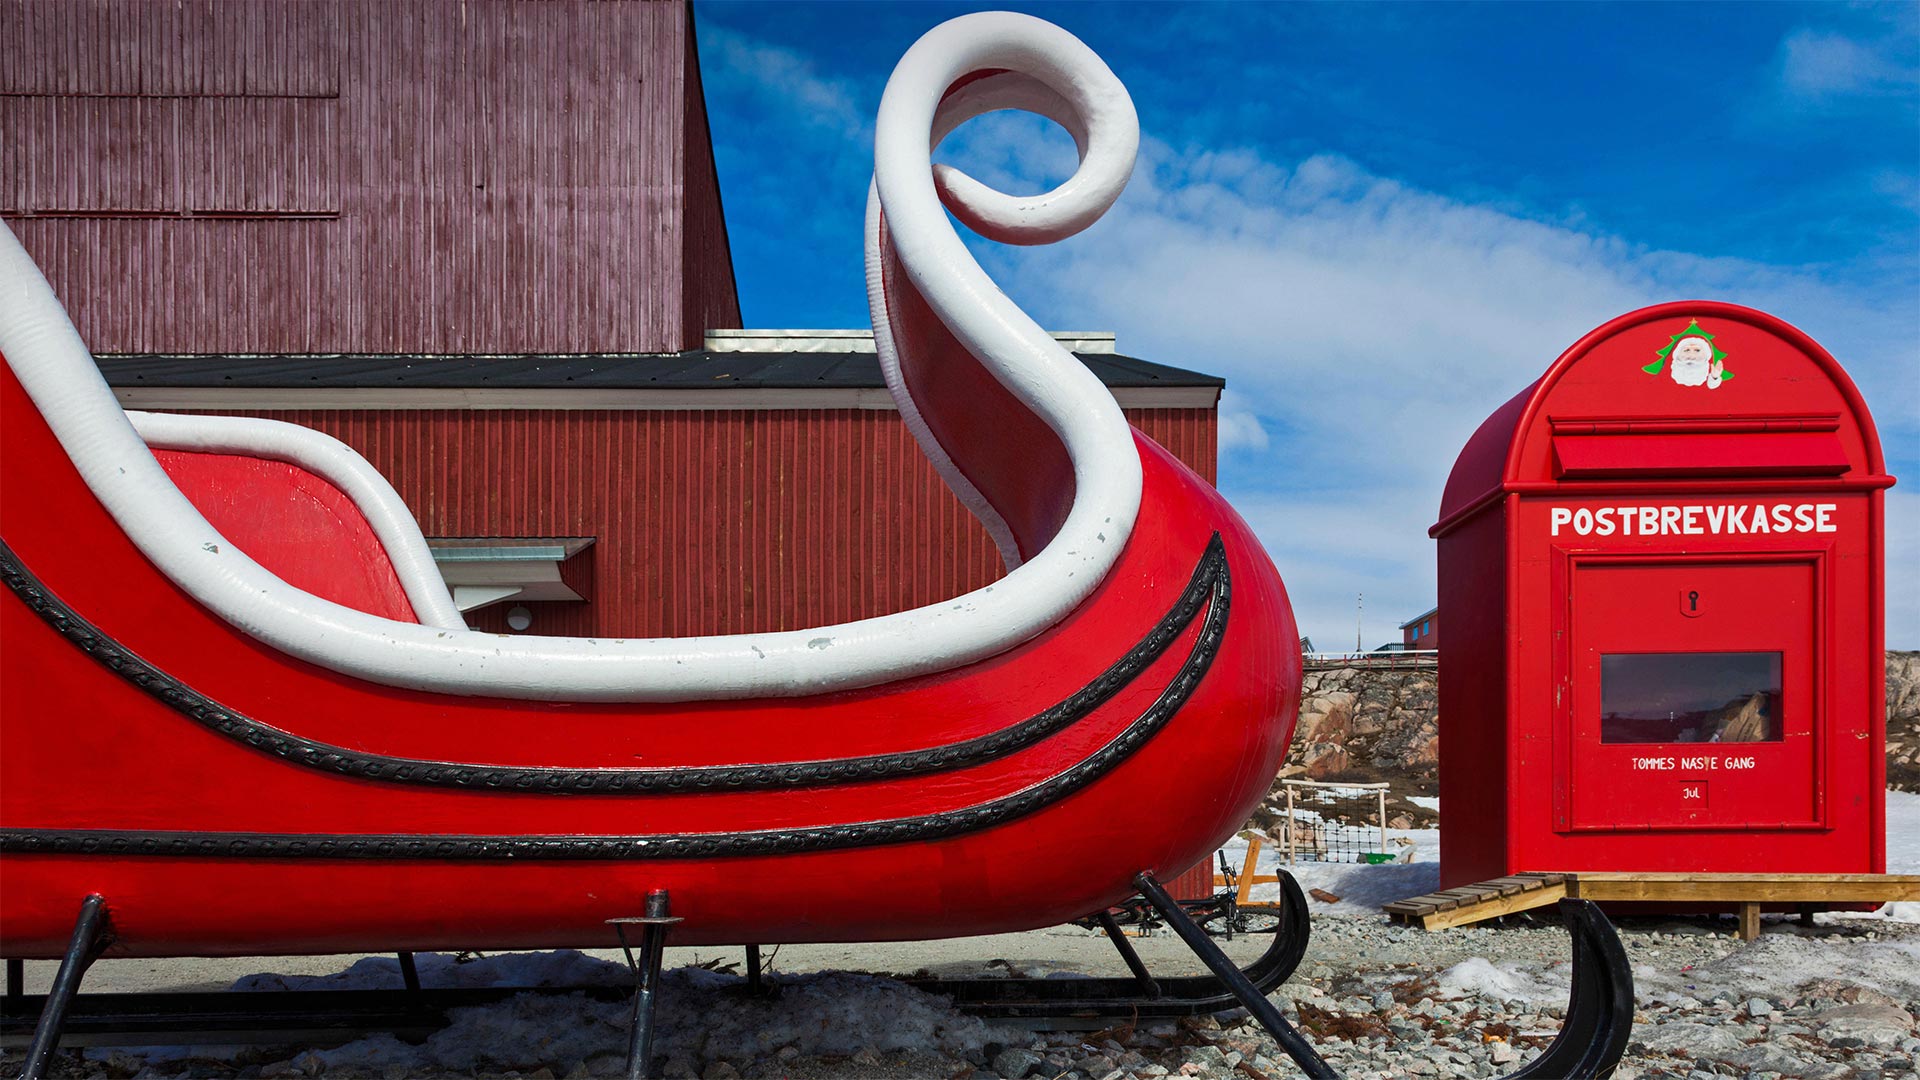 Santa's giant sleigh and mailbox, Ilulissat, Greenland - Walter Bibikow/Jon Arnold Images Ltd/Alamy)